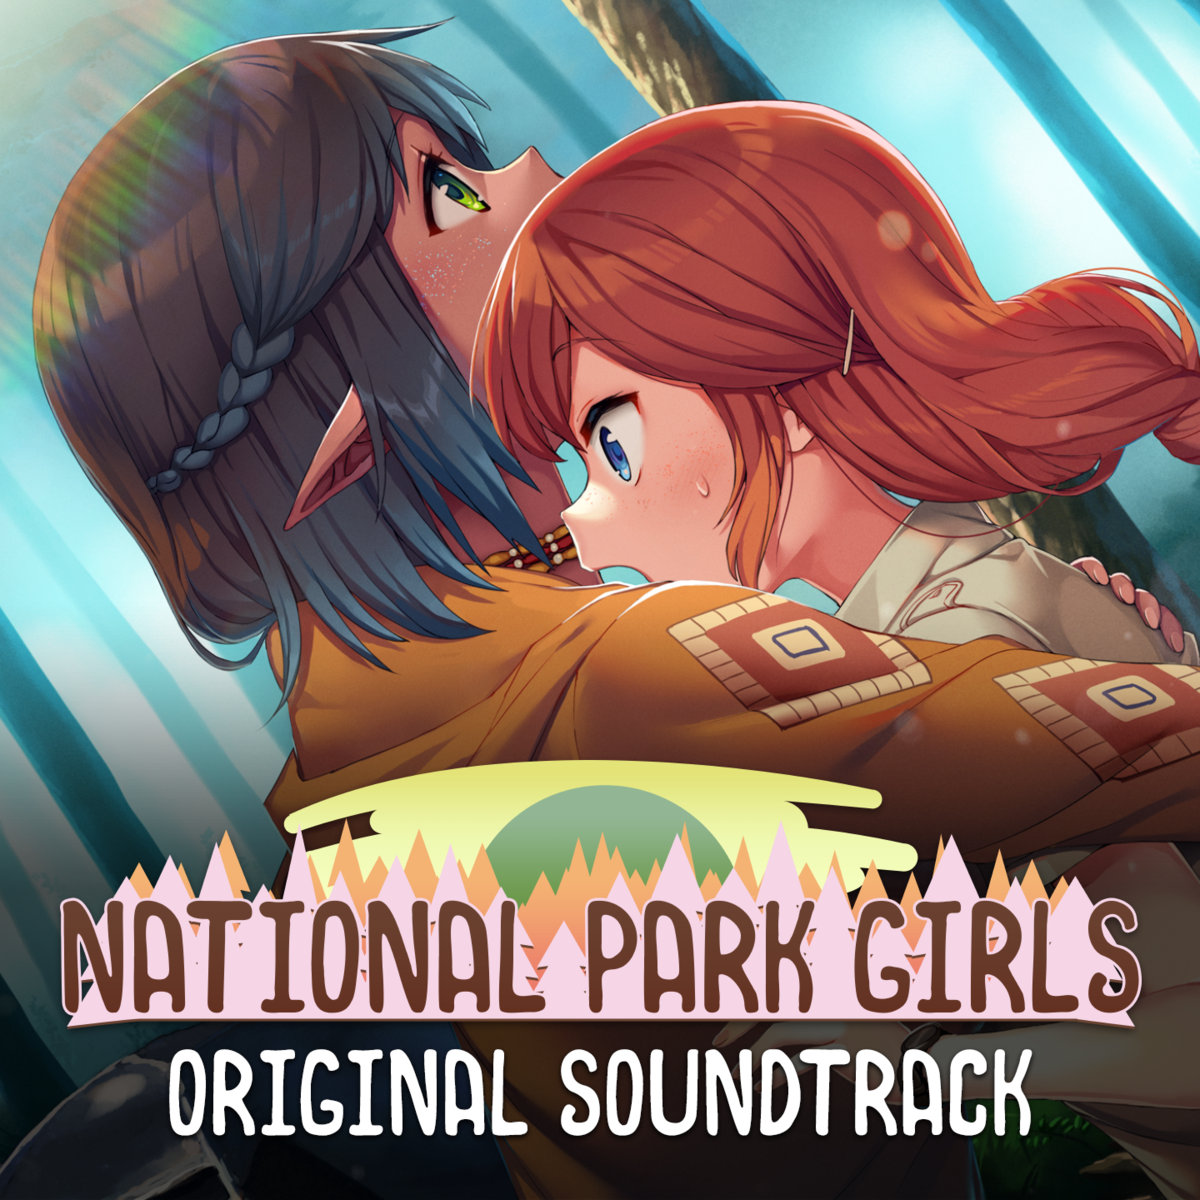 Girl soundtrack